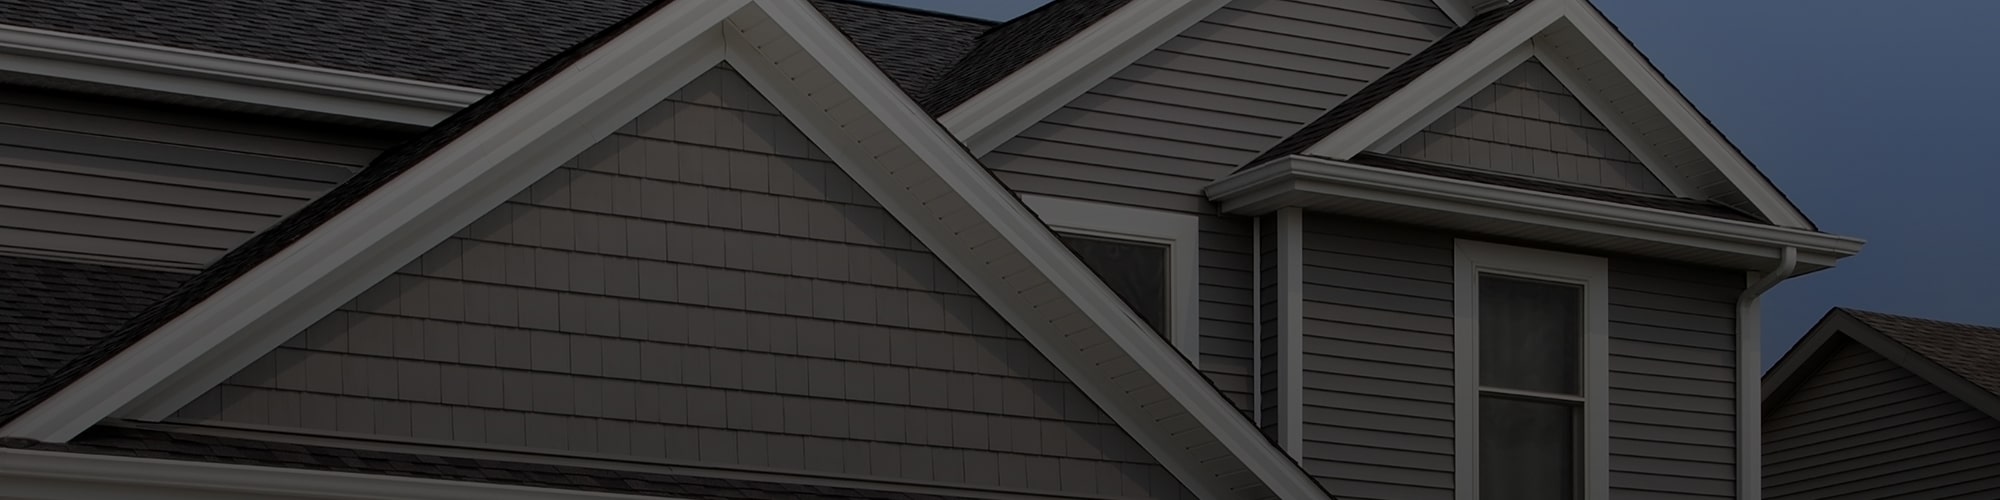 Roofing Contractors in Grand Rapids Installs Siding